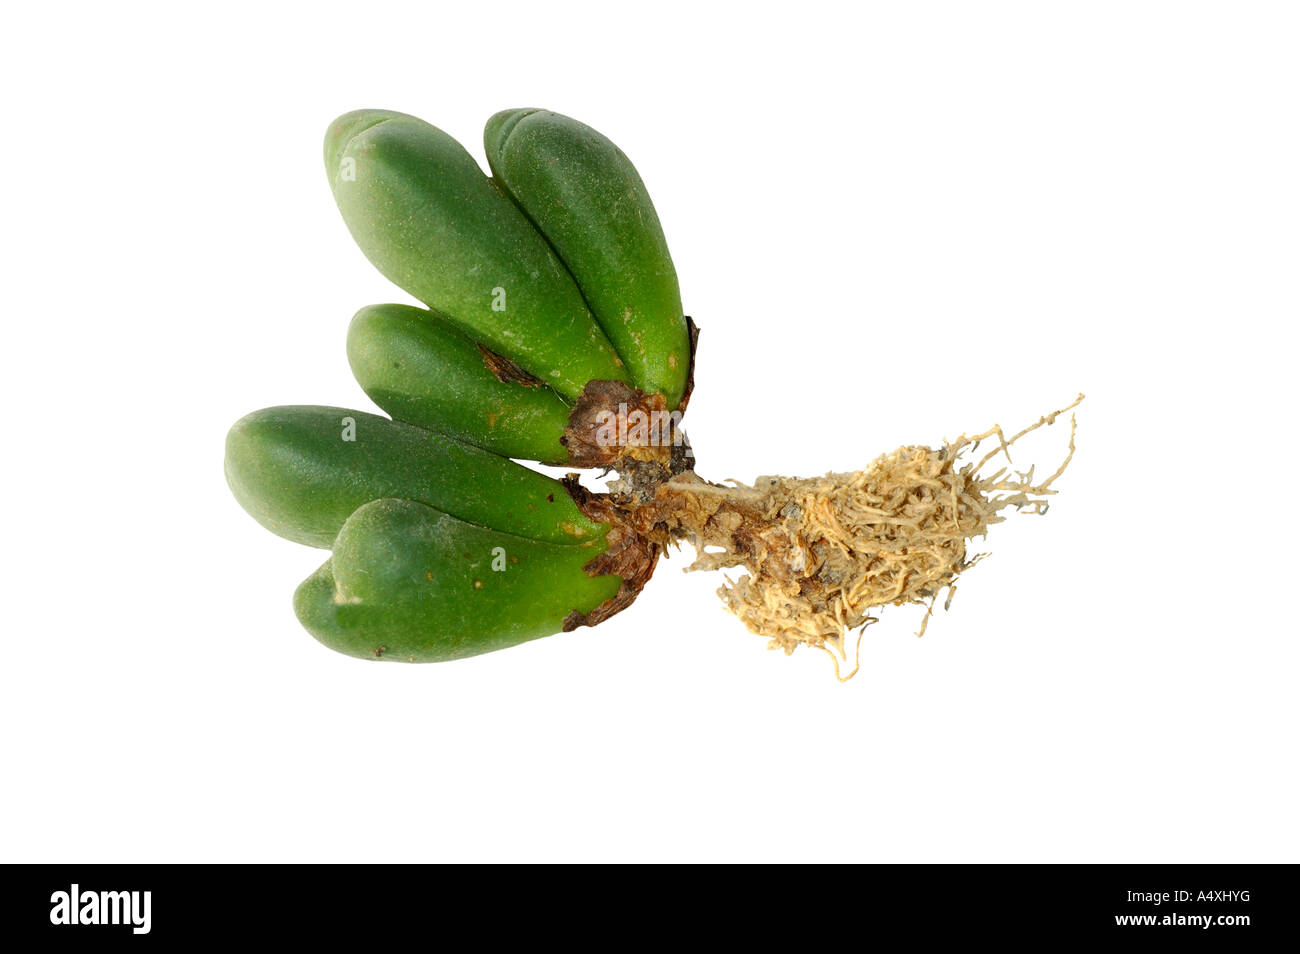 Conophytum meyeri, pant body with roots Stock Photo